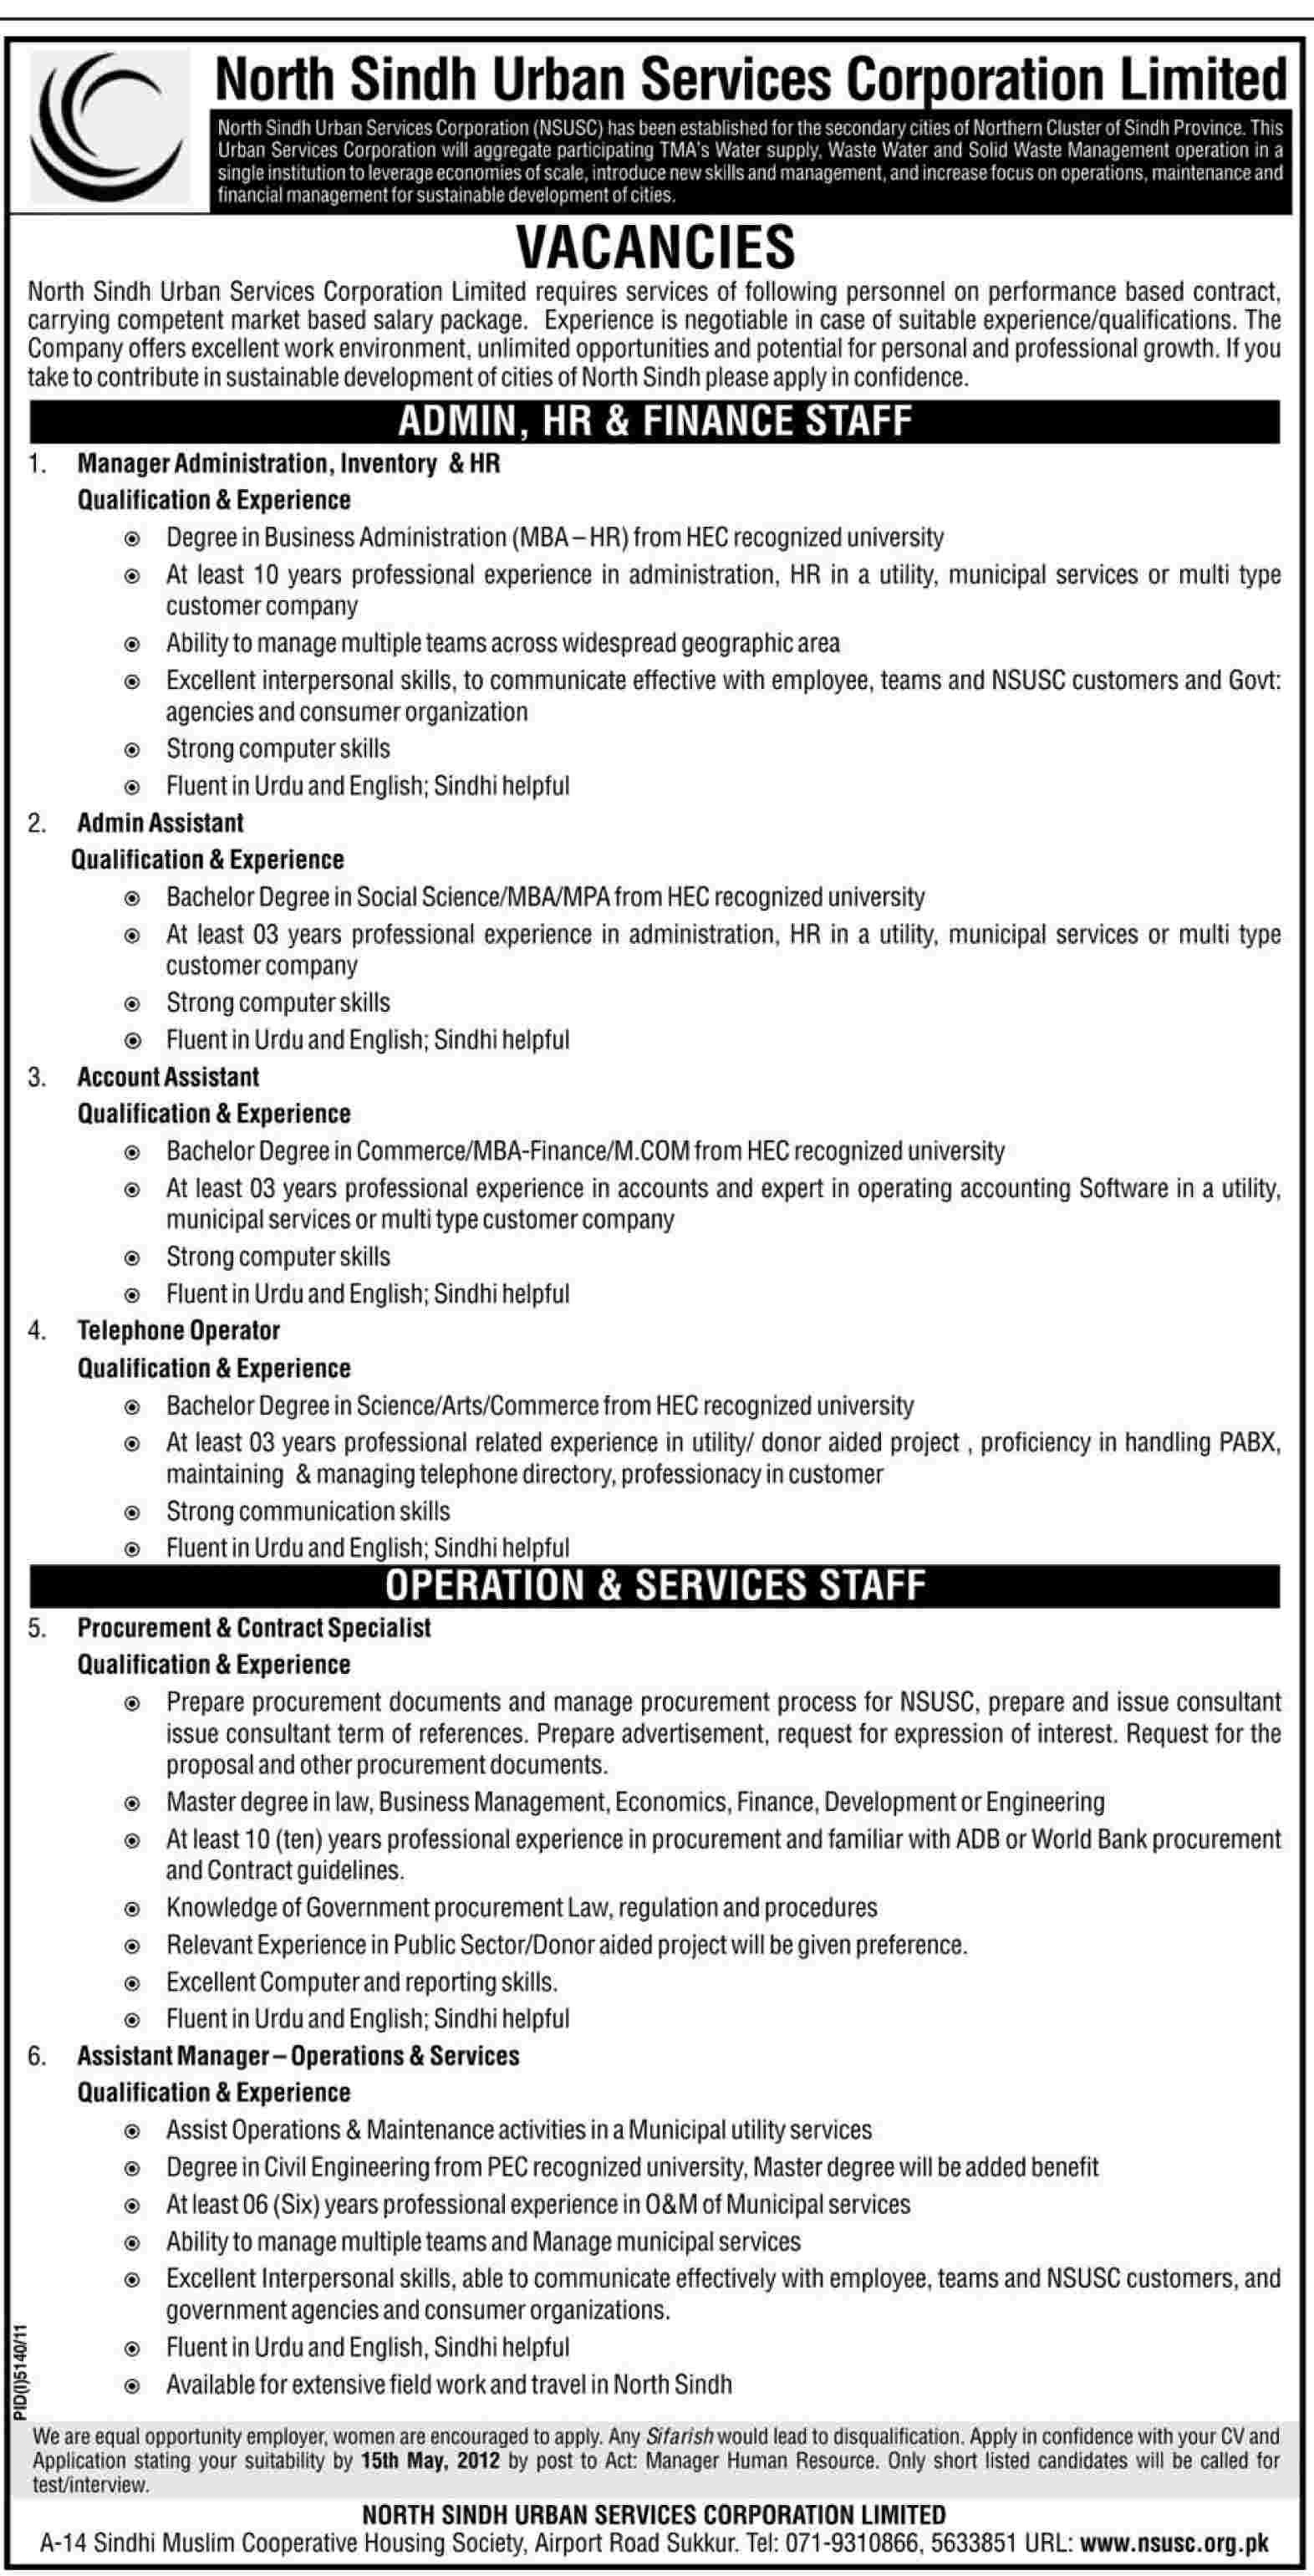 Jobs at NSUS Northern Sindh Urban Services Corporation Ltd. (Govt. Job)